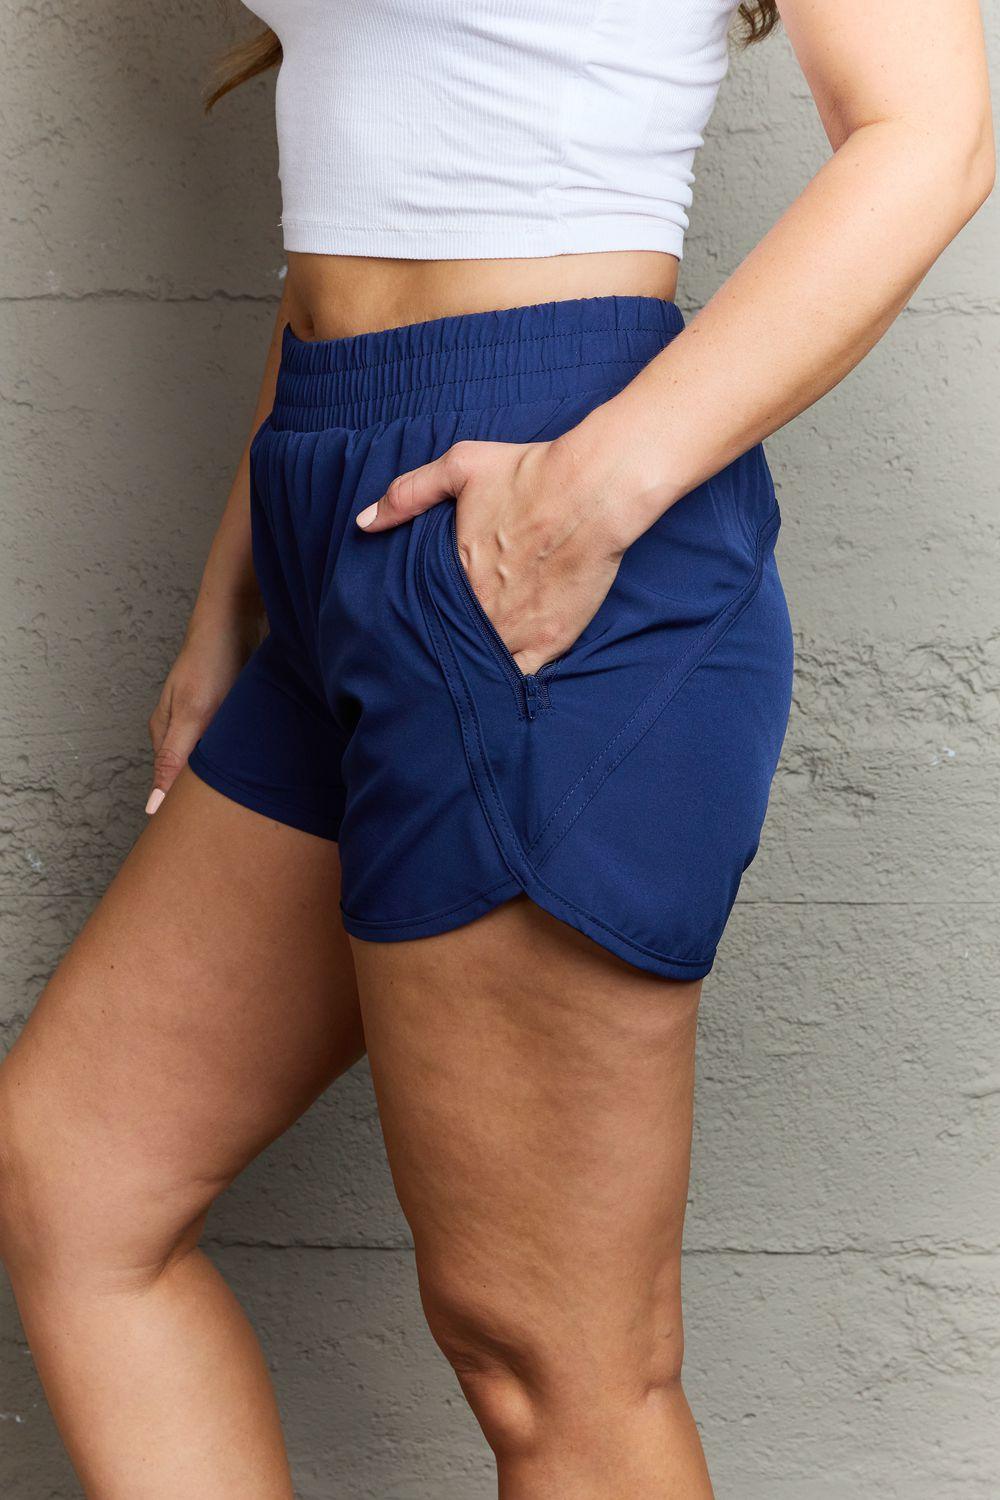 Bona Fide Fashion - Zipper Pocket Detail Active Shorts - Women Fashion - Bona Fide Fashion